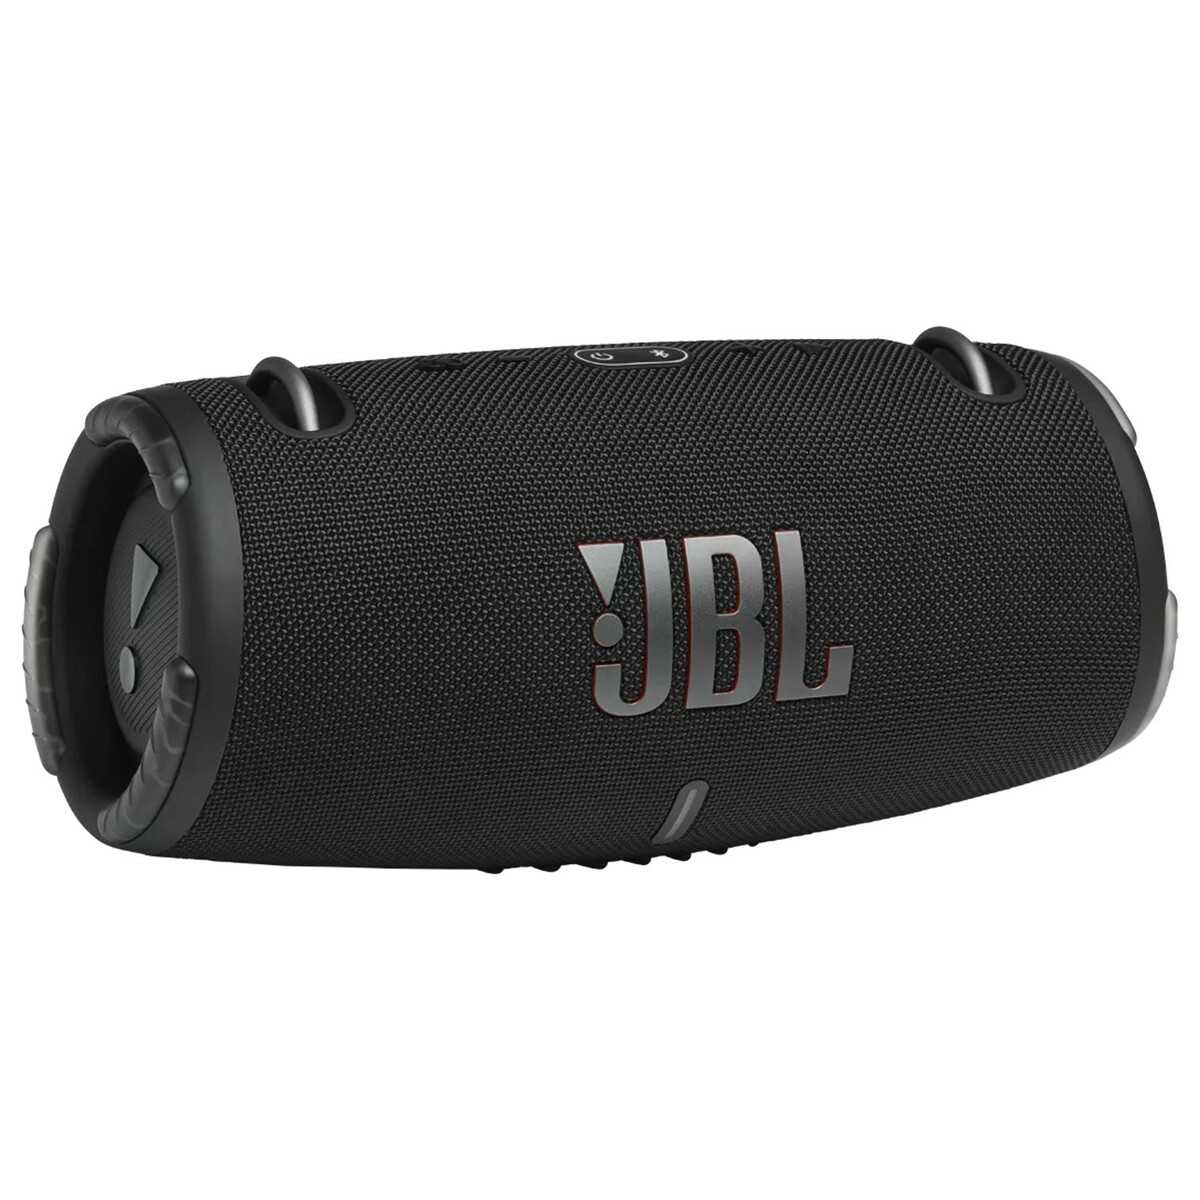 JBL Portable Bluetooth Speaker Xtreme 3 Black